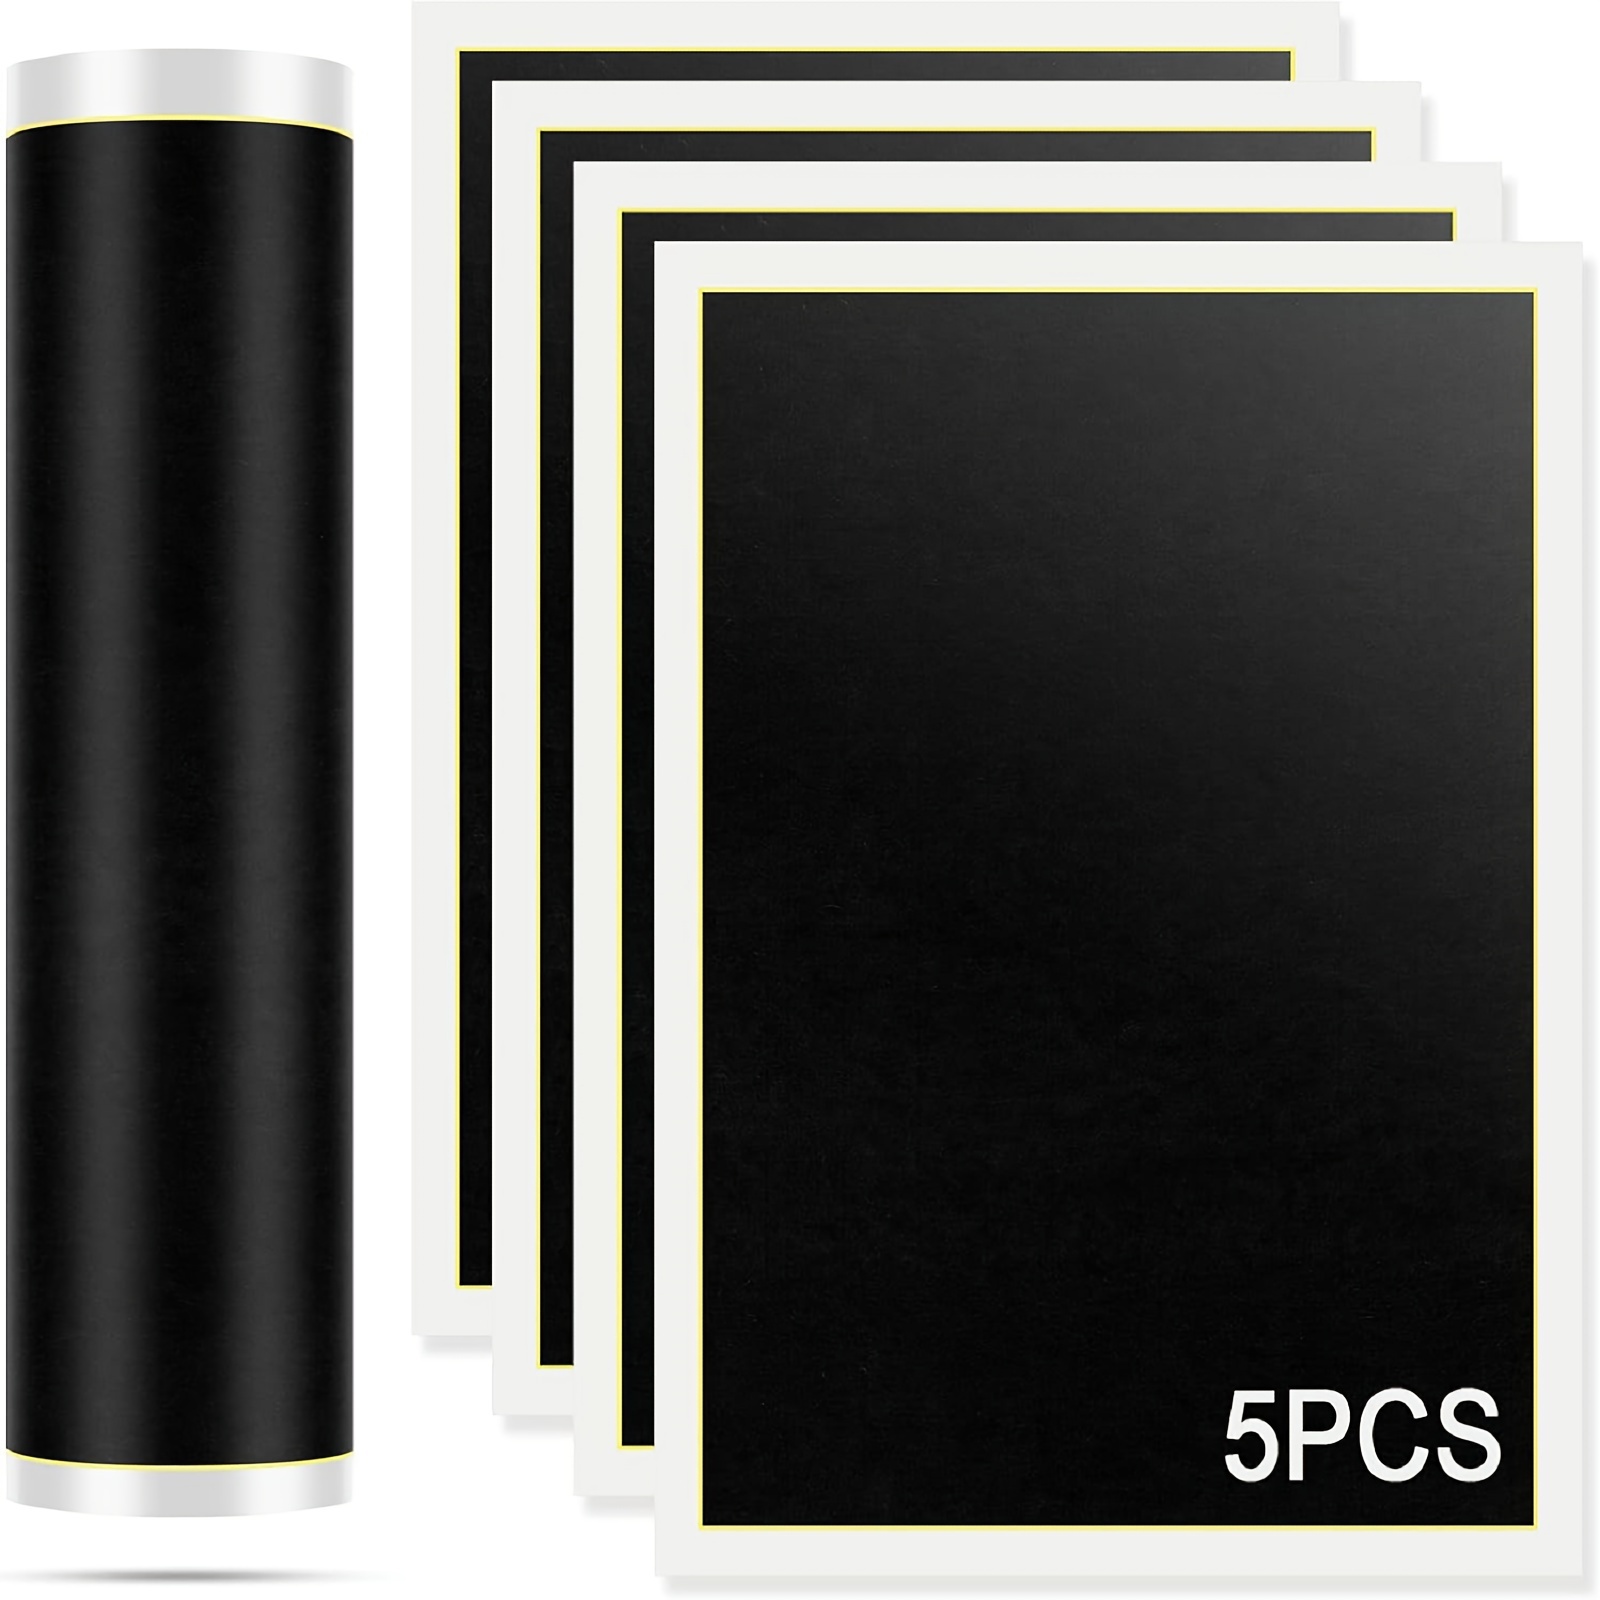 

5pcs Black Laser Engraving Marking Paper, 14.2"*9.4" Laser Engraving Marking Color Paper, Laser Engraving Material For Glass, Metal, Ceramics, Diy Handicrafts